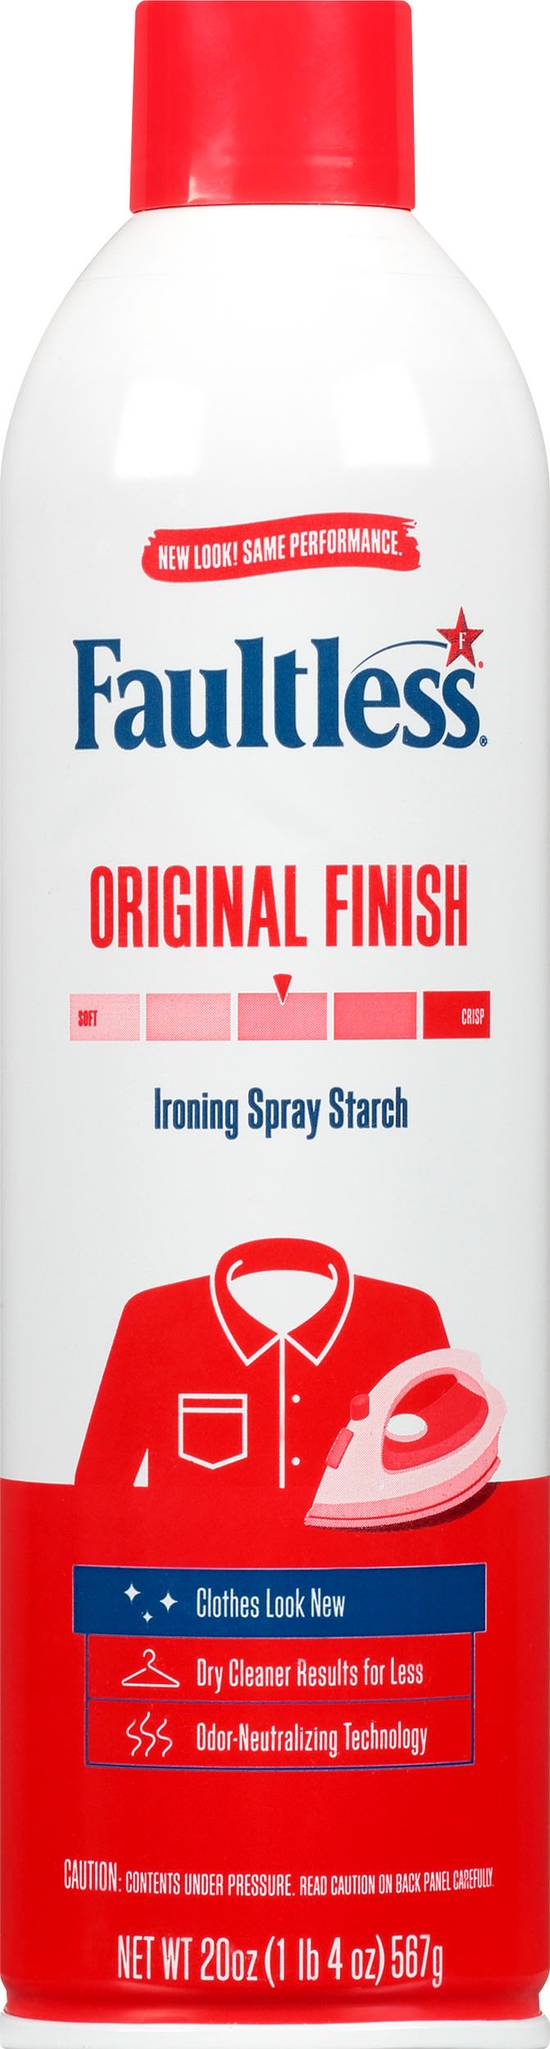 Faultless Ironing Spray Starch, Original Finish - 20 oz